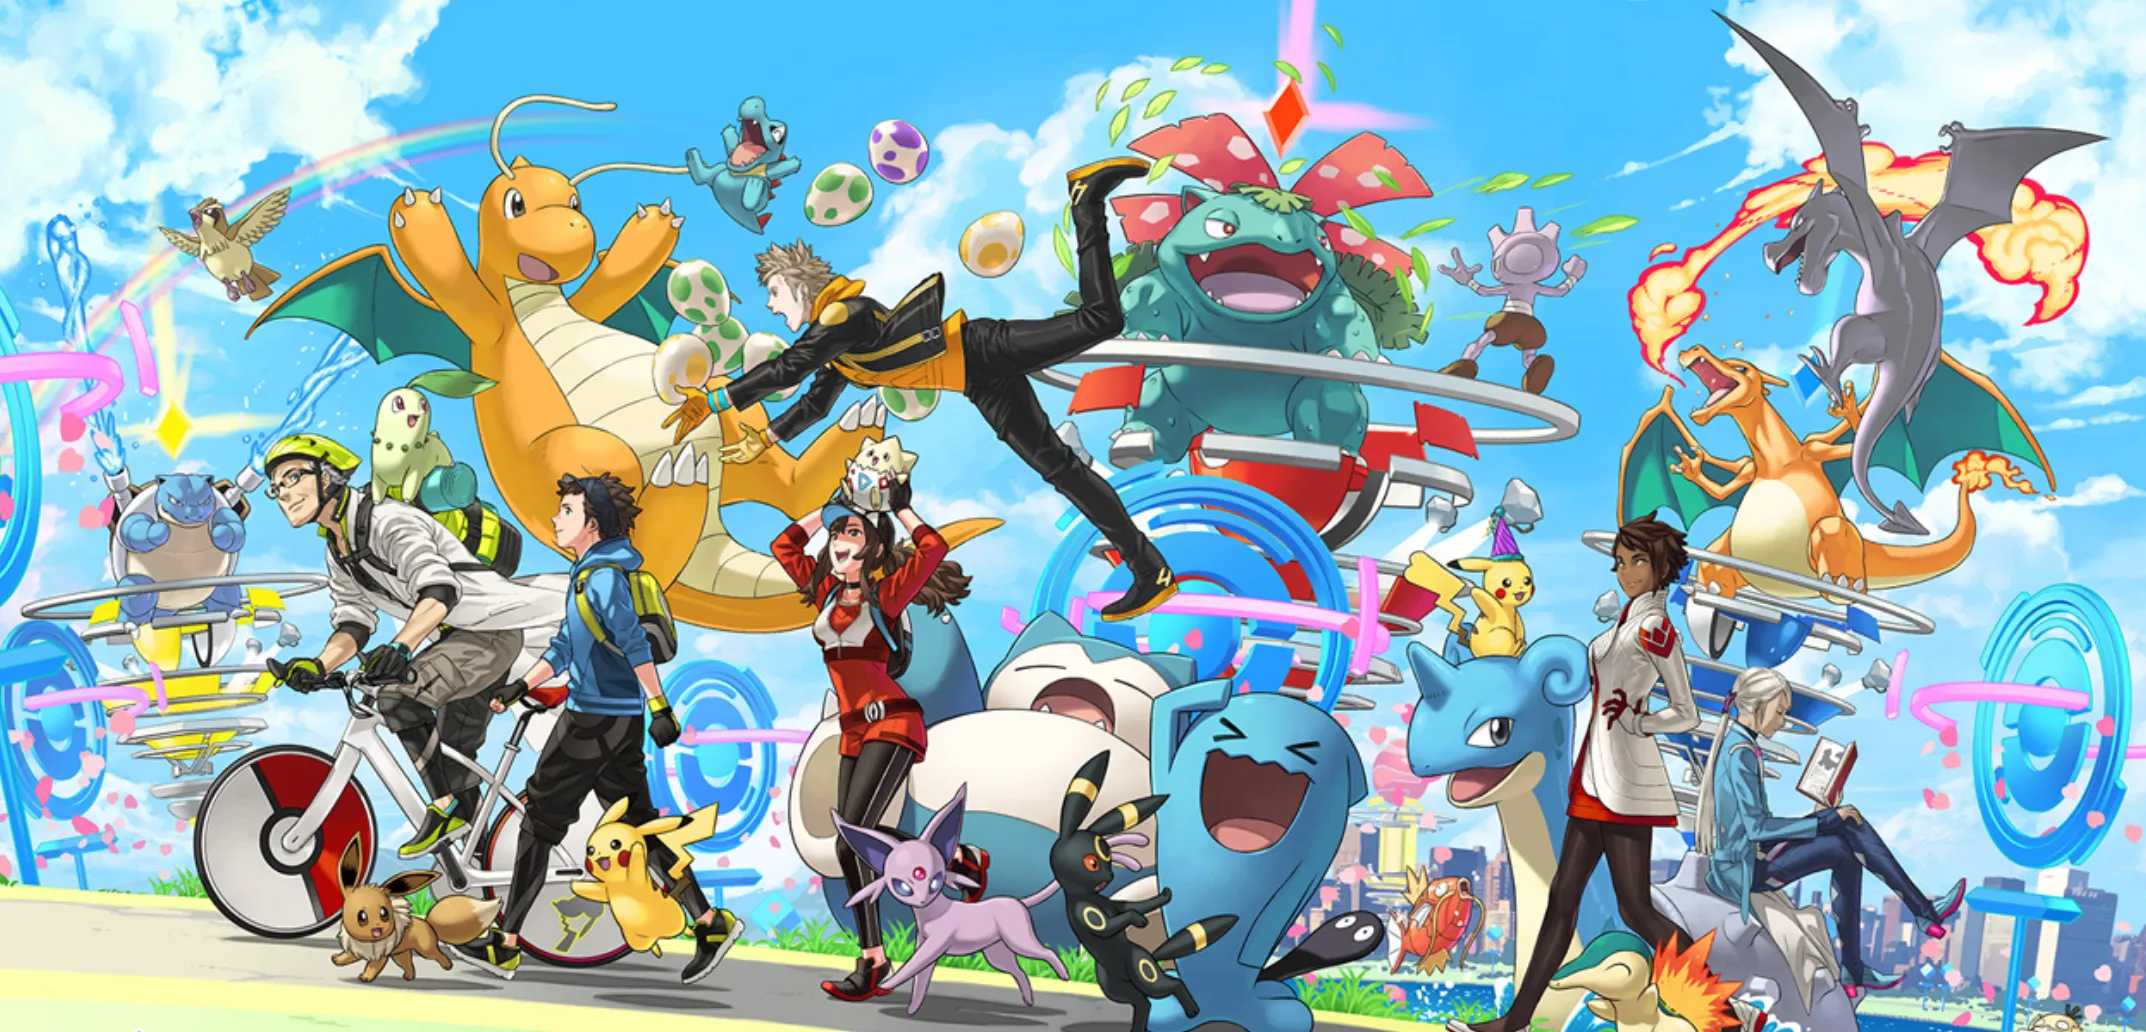 Pokémon Go event schedule for December 2023